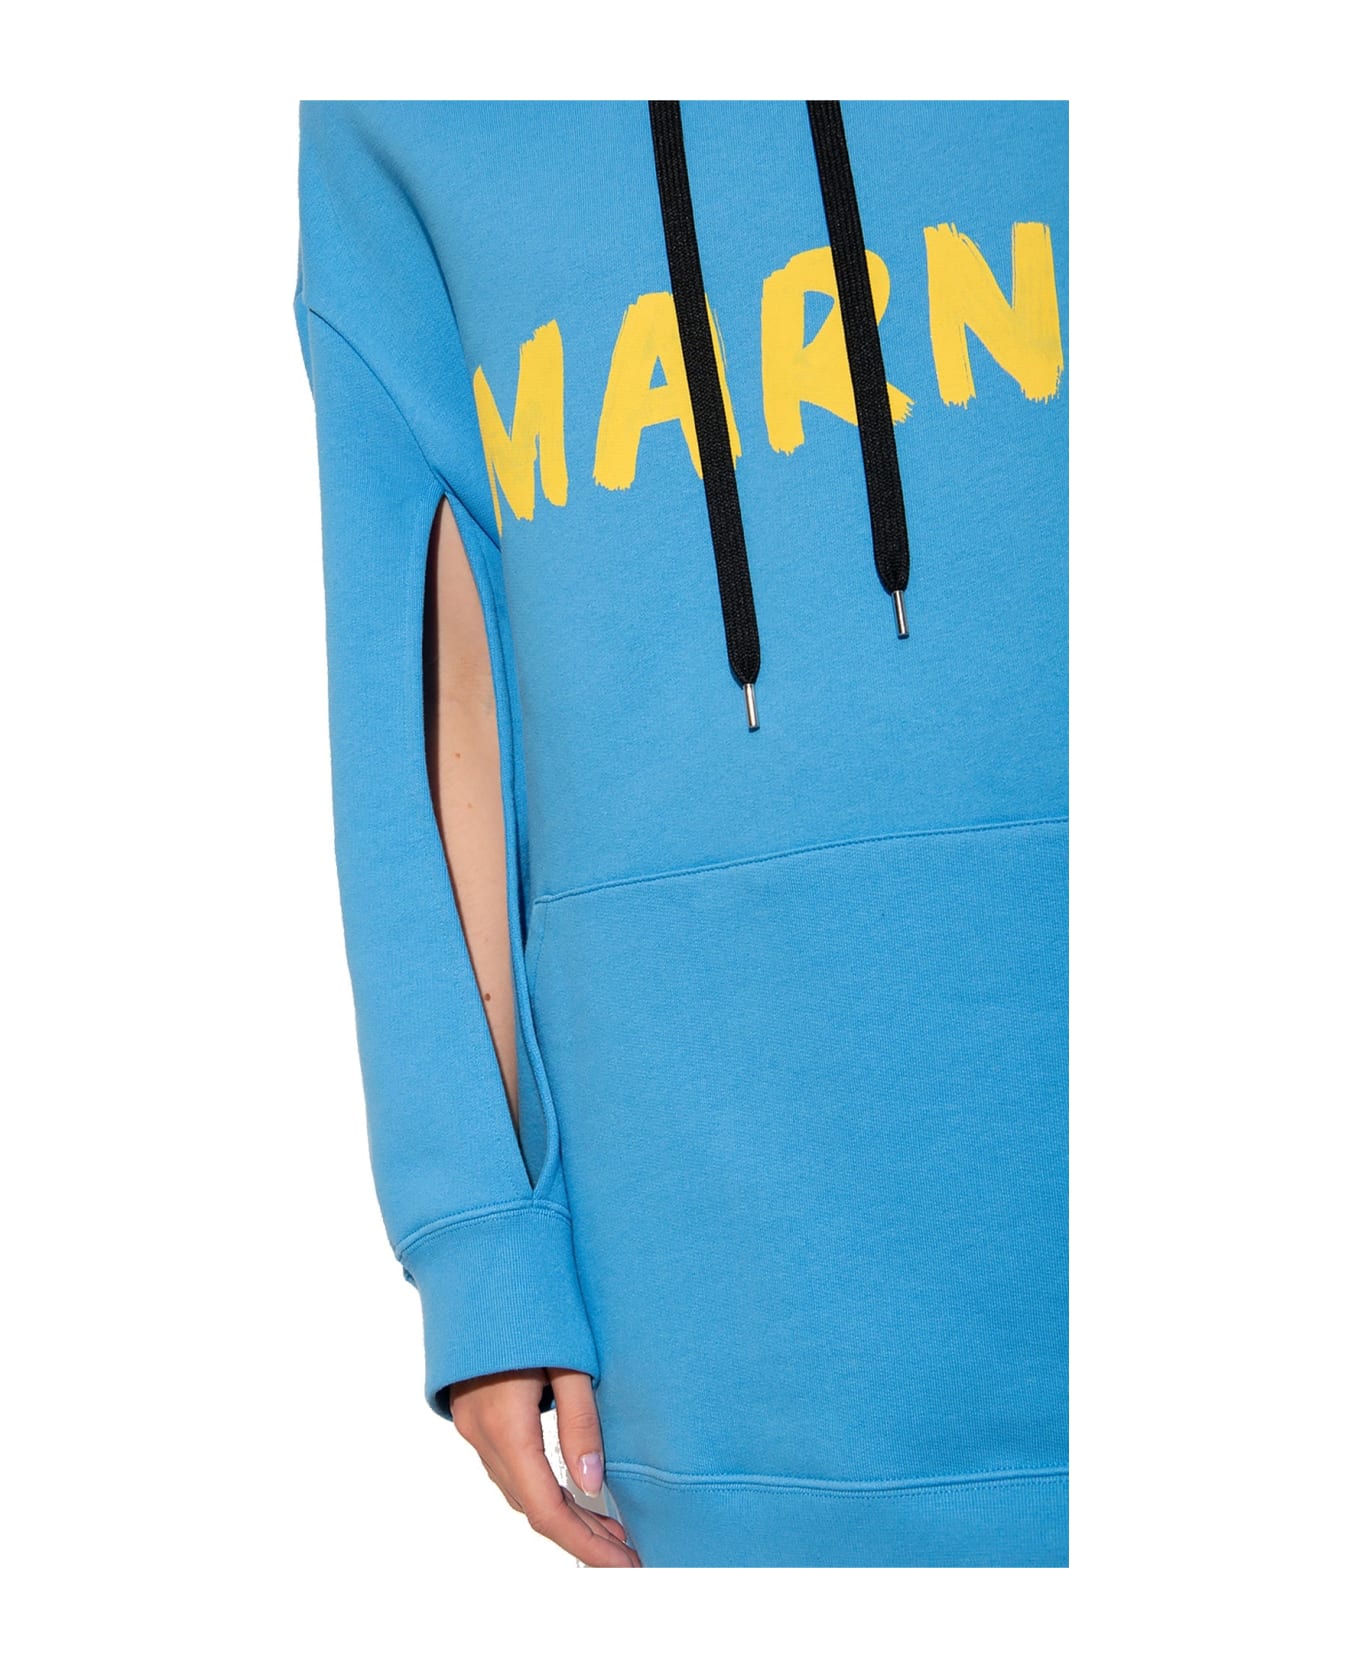 Marni Oversize Hooded Sweatshirt - Blue フリース